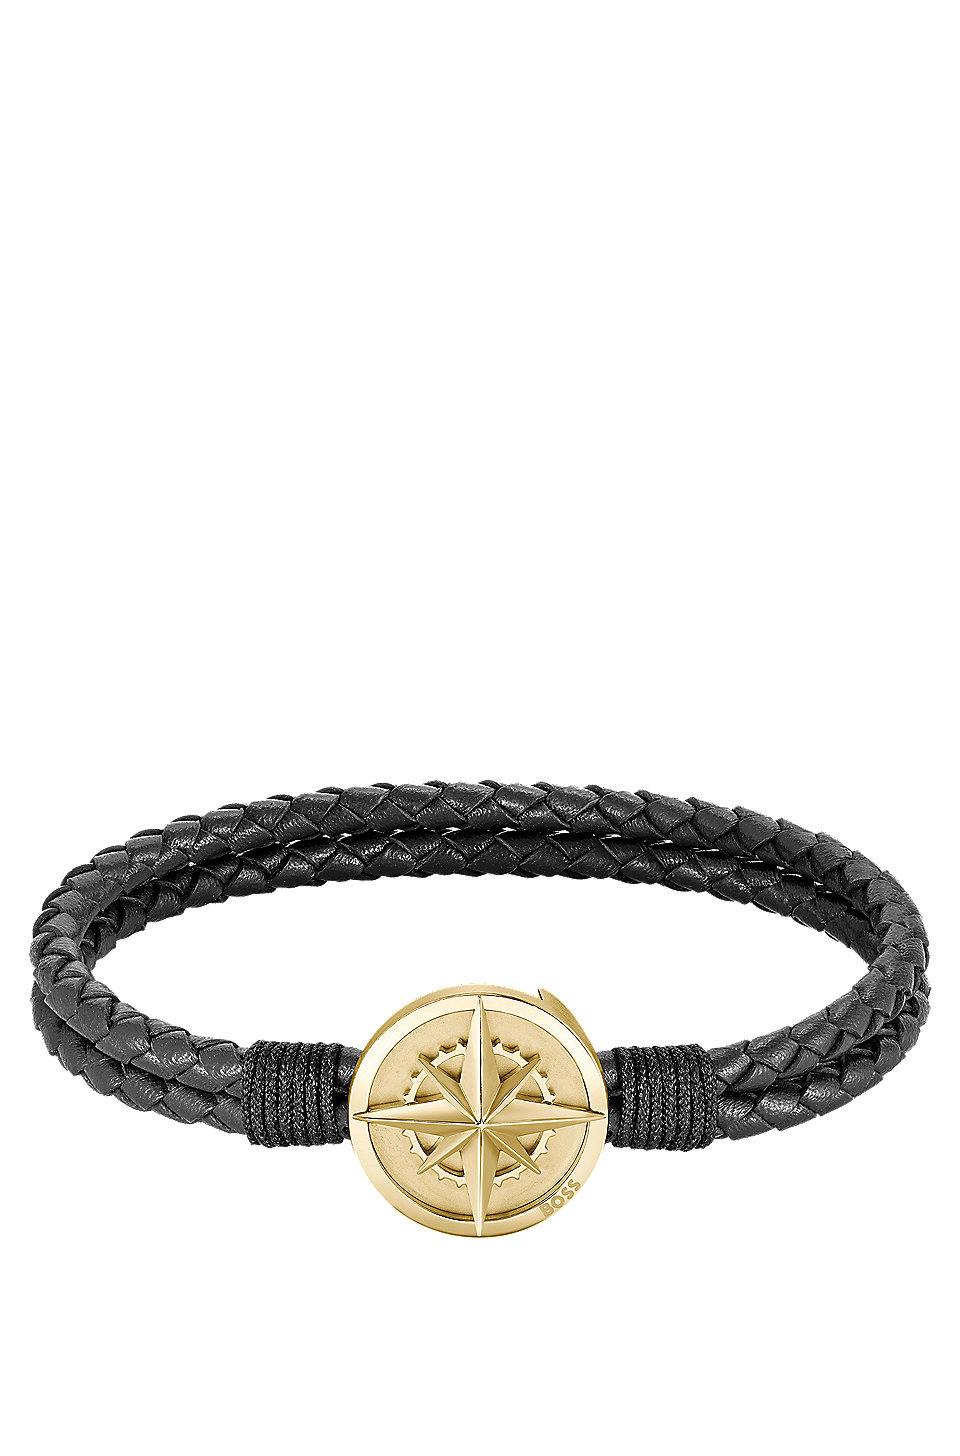 BOSS - Schwarzes Armband aus geflochtenem Leder mit goldfarbenem Kompass